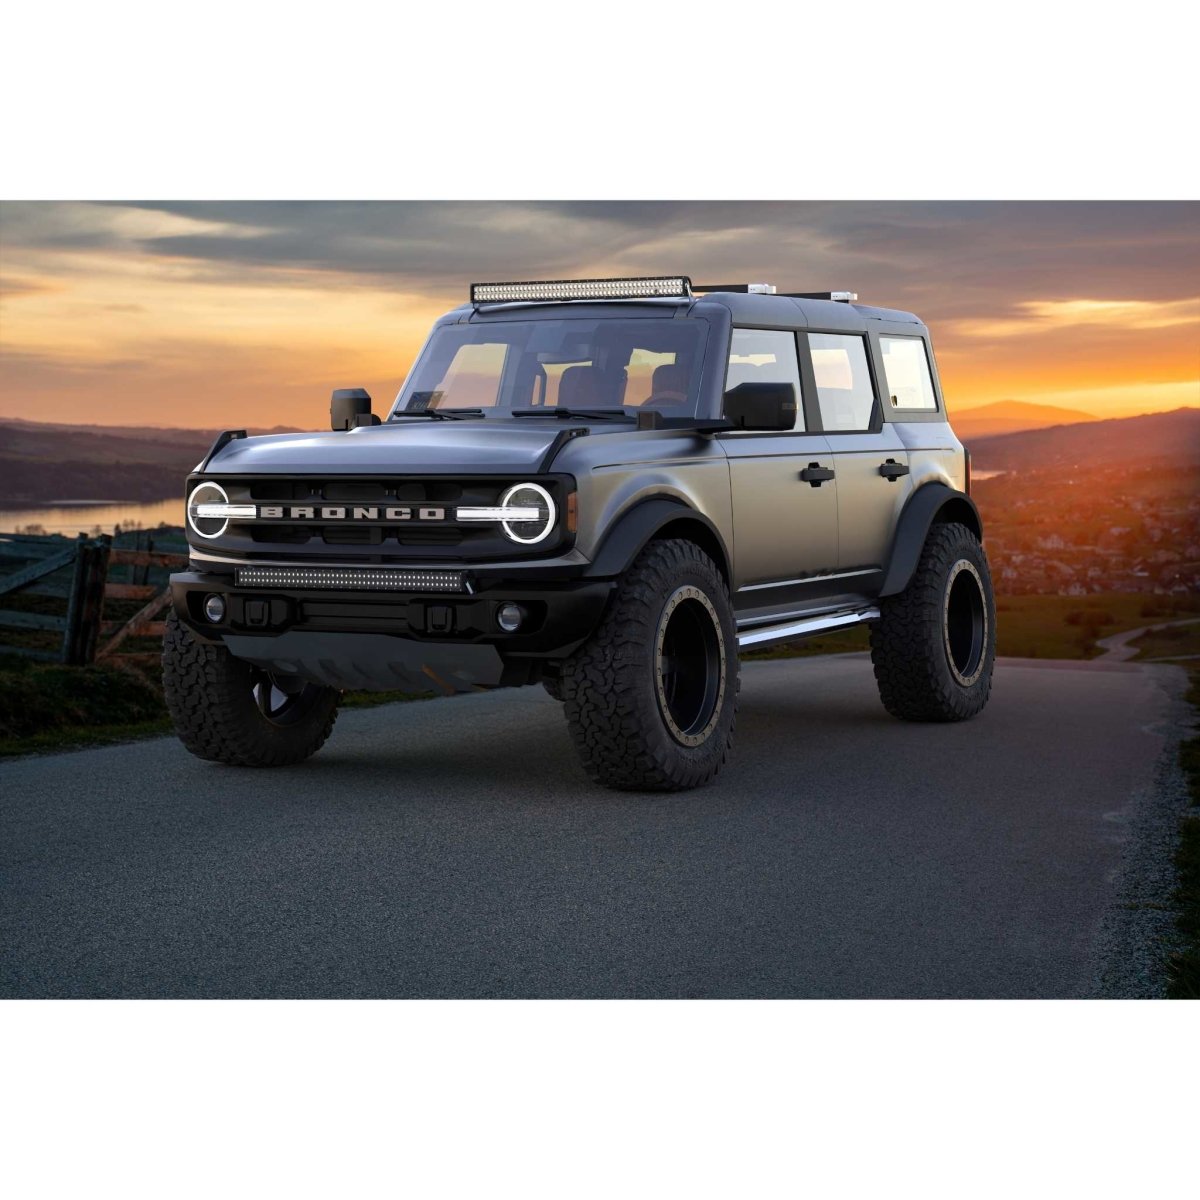 Ford Bronco Accessories - Rad Bronco Parts